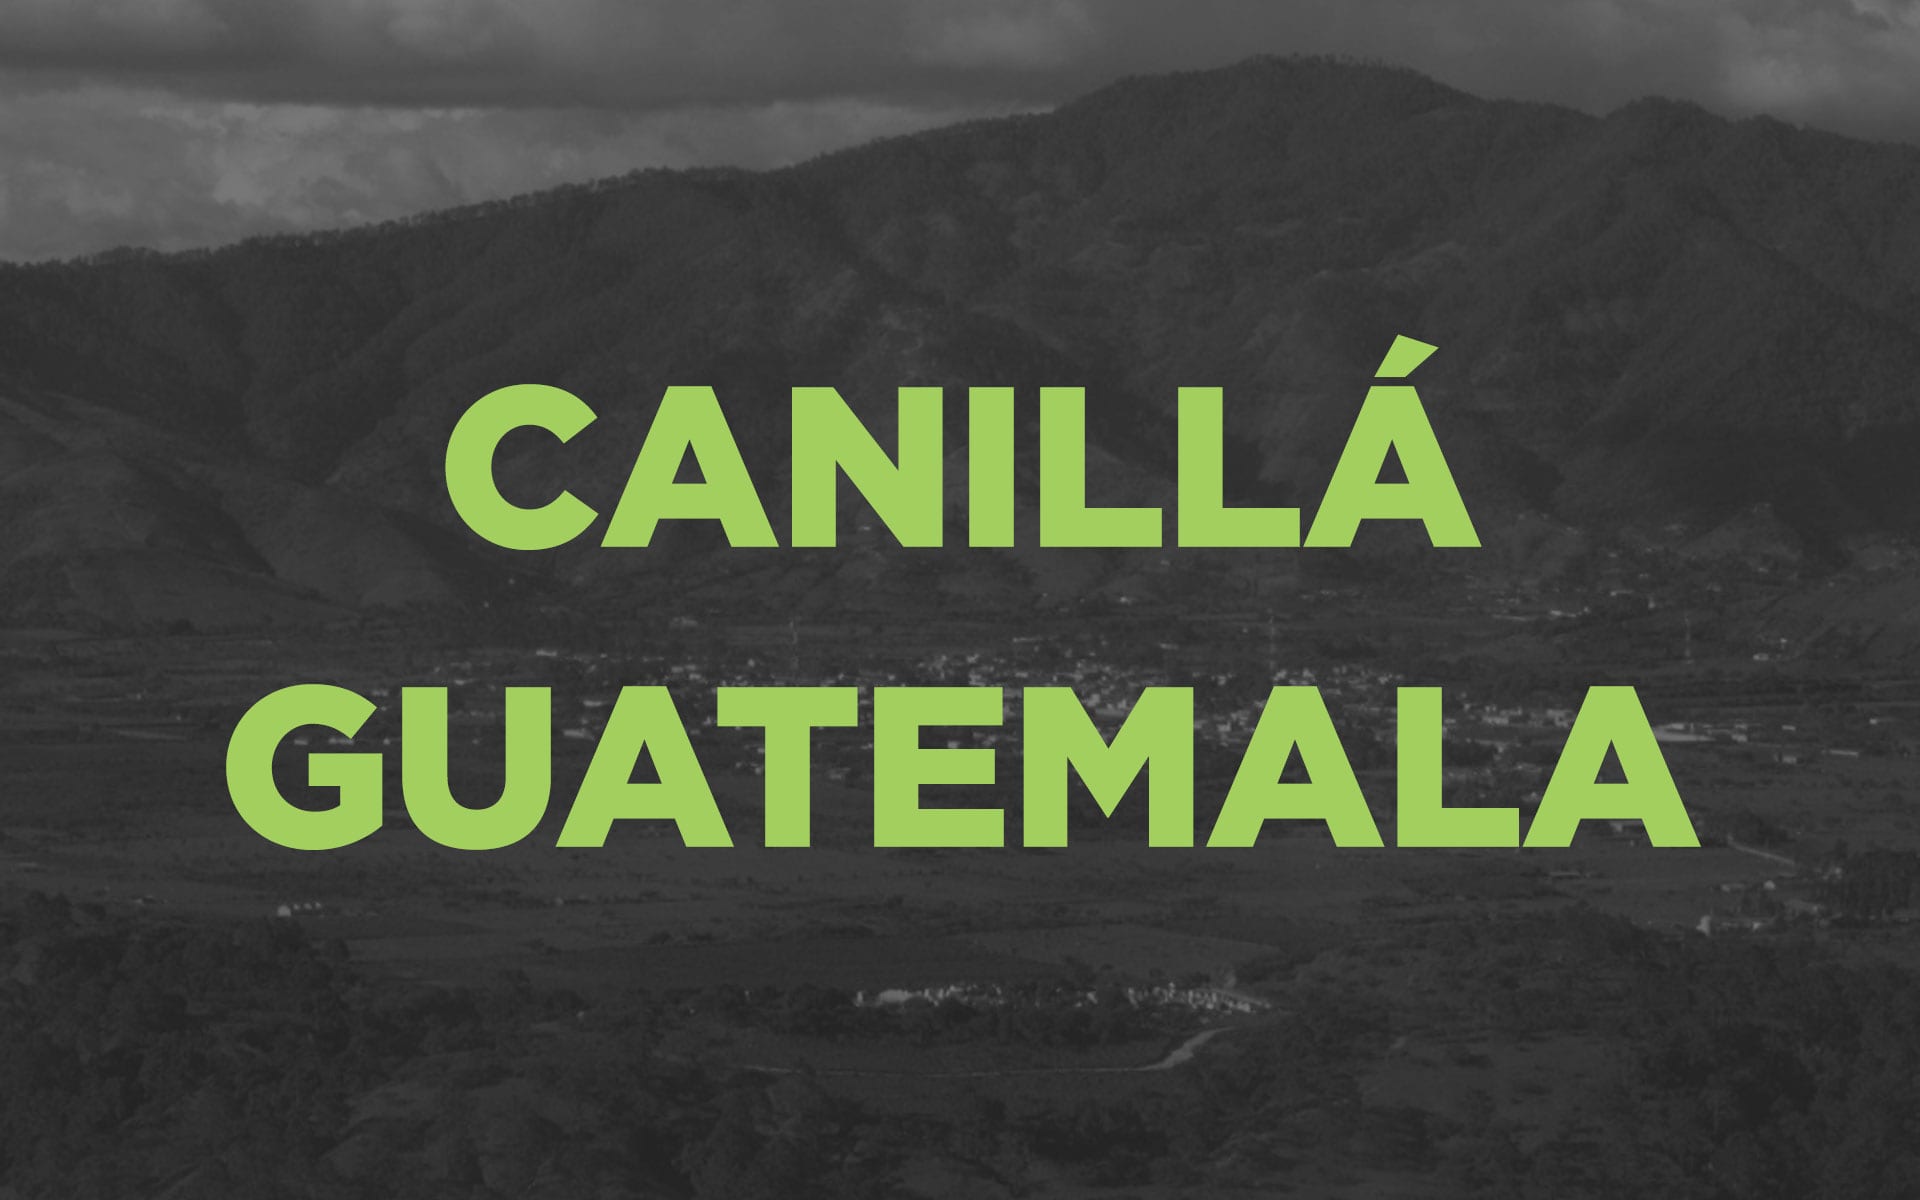 Canillá, Guatemala